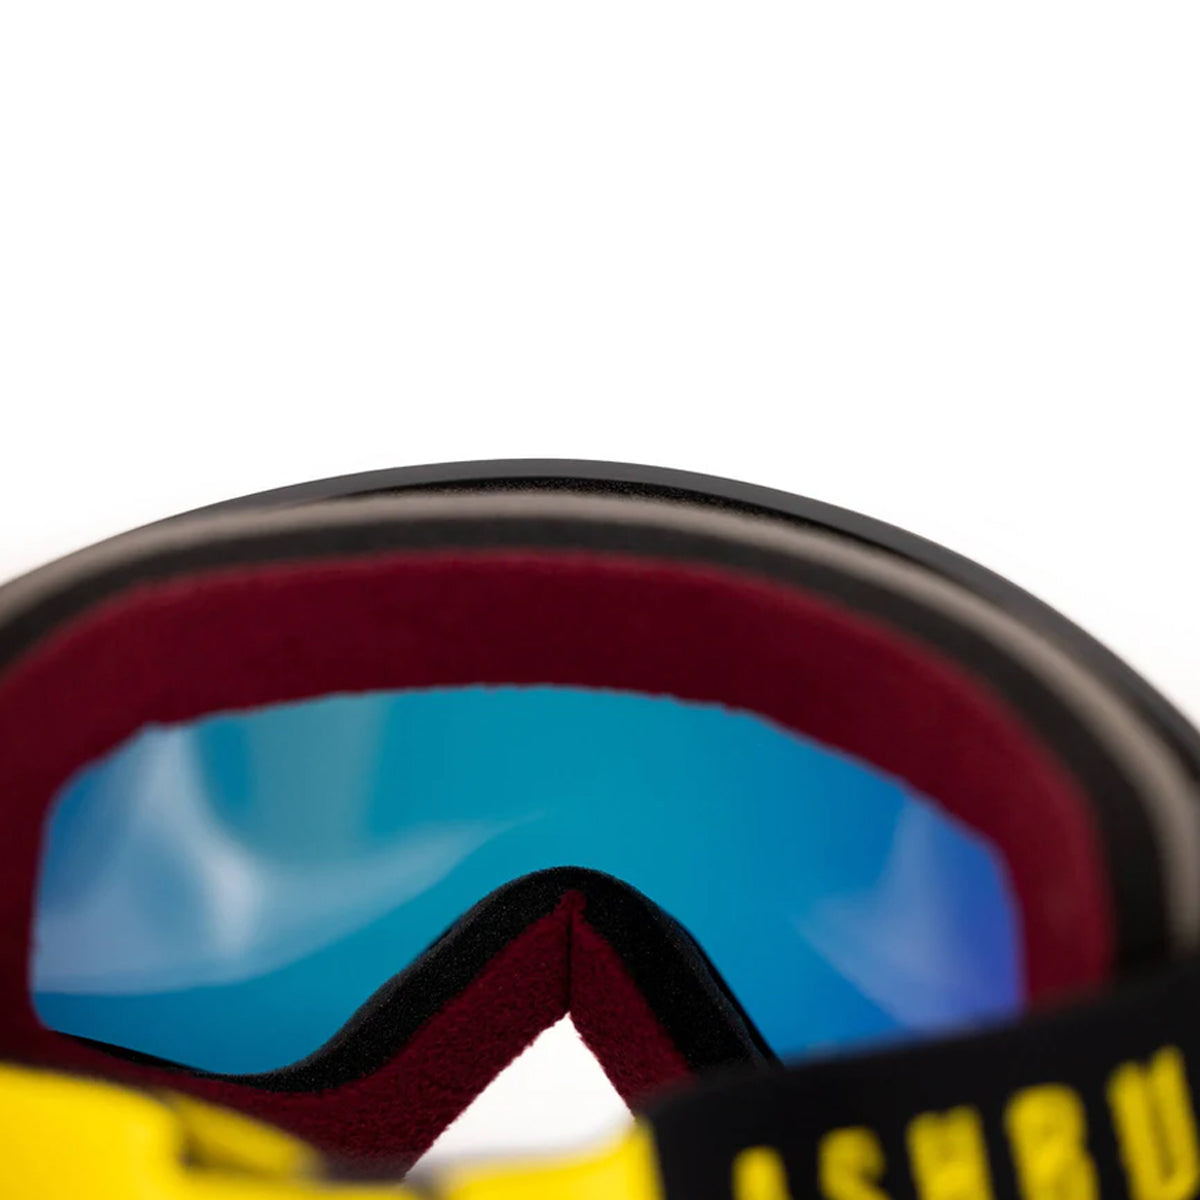 Ashbury Blackbird Snowboard Goggles - Bank/Gold Mirror/Yellow Spare image 3